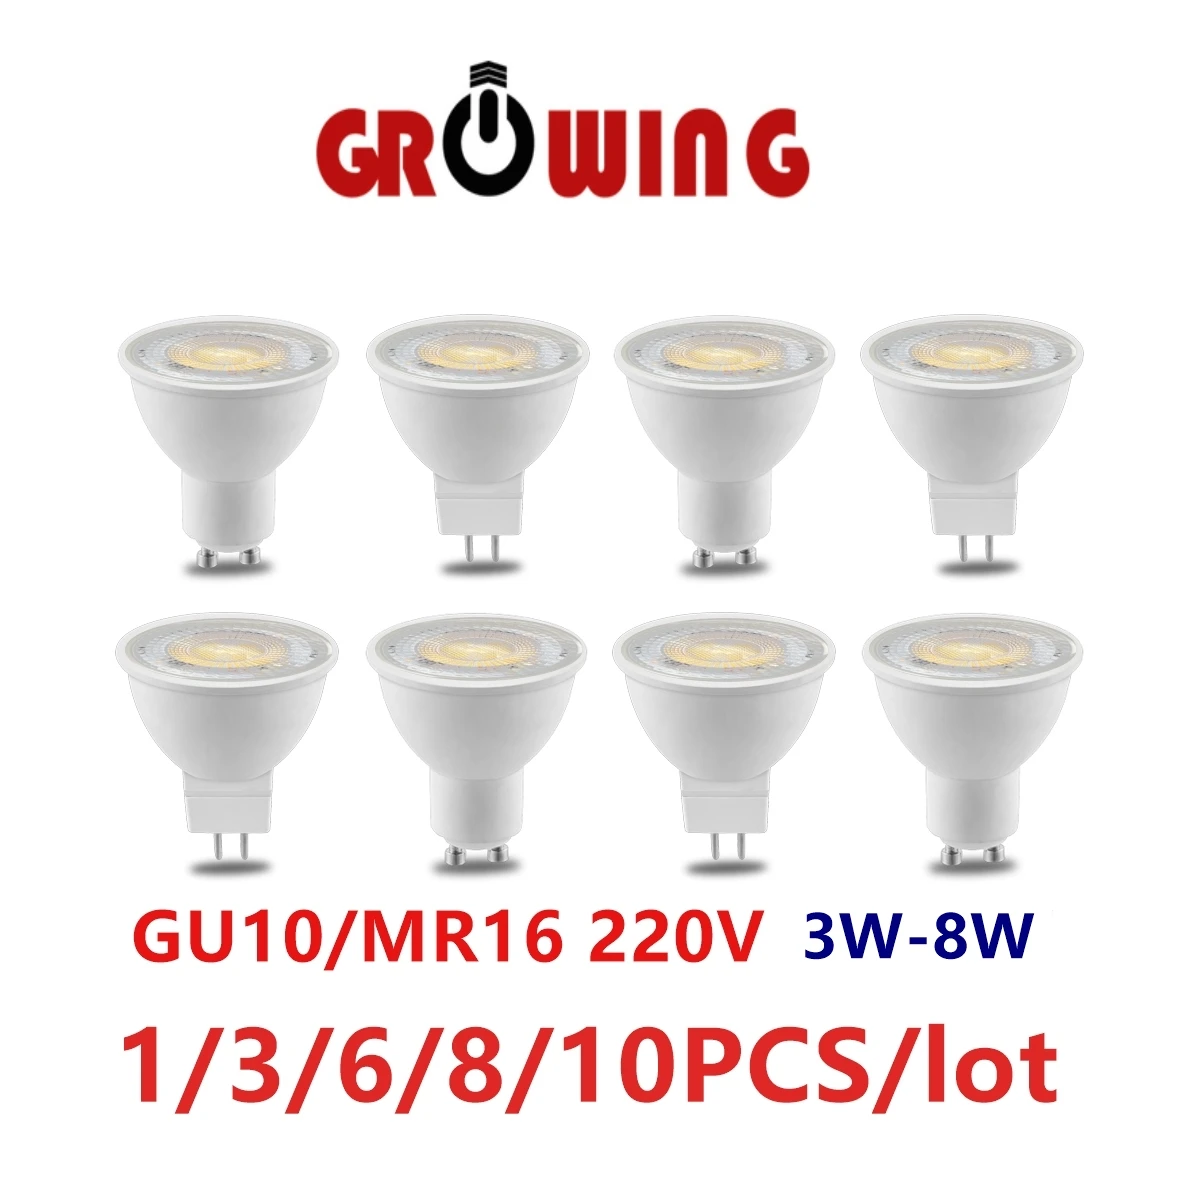 1-10PCS LED spotlight COB GU10 MR16 220V 3W-8W High lumen for down light kitchen living room bathroom replace 50W halogen lamp